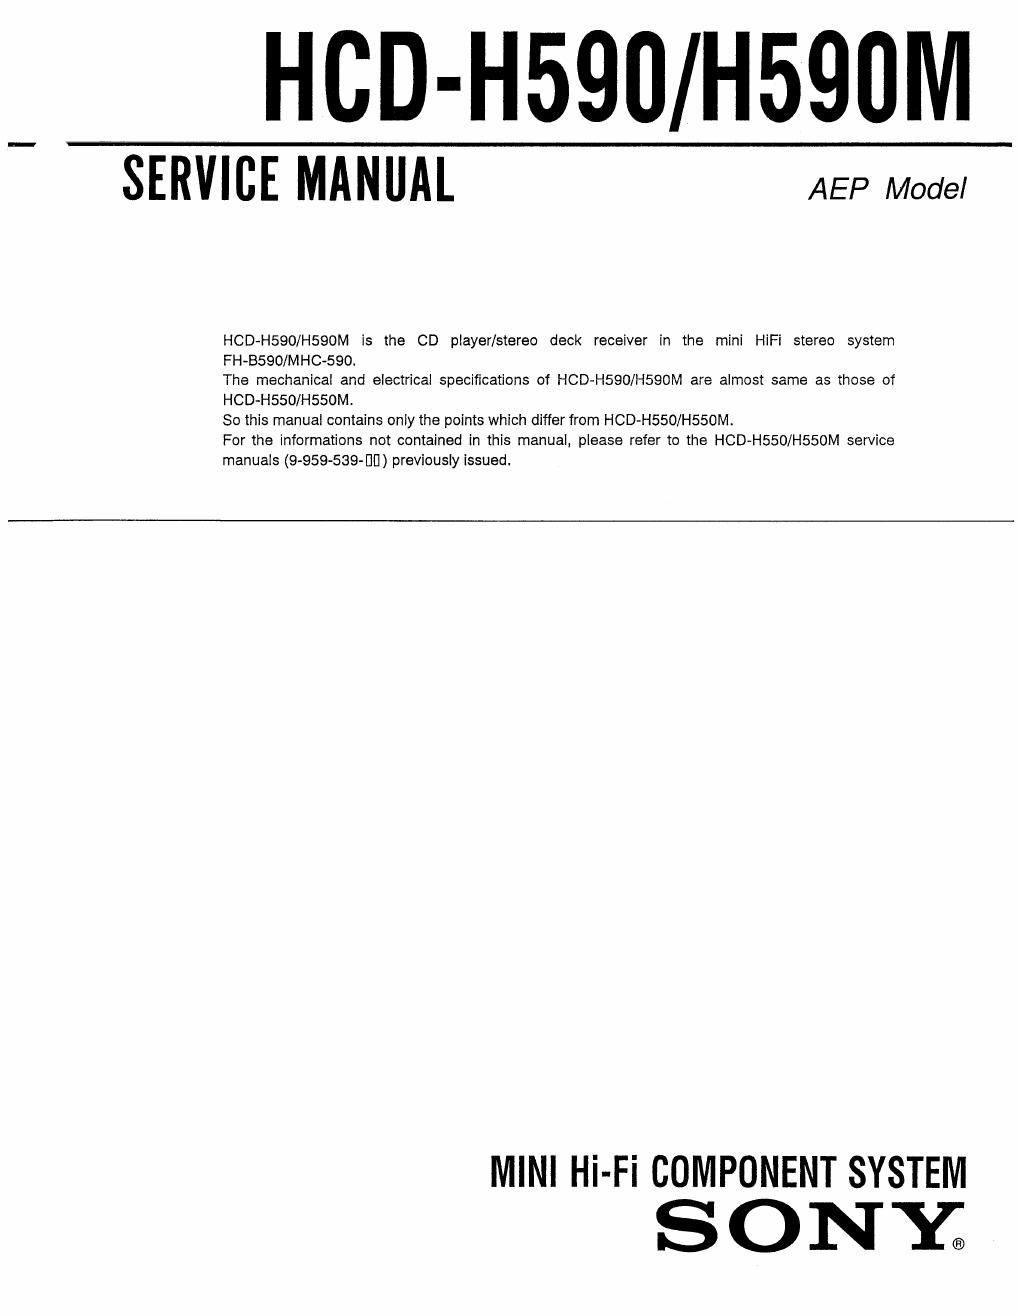 sony hcd h 590 service manual